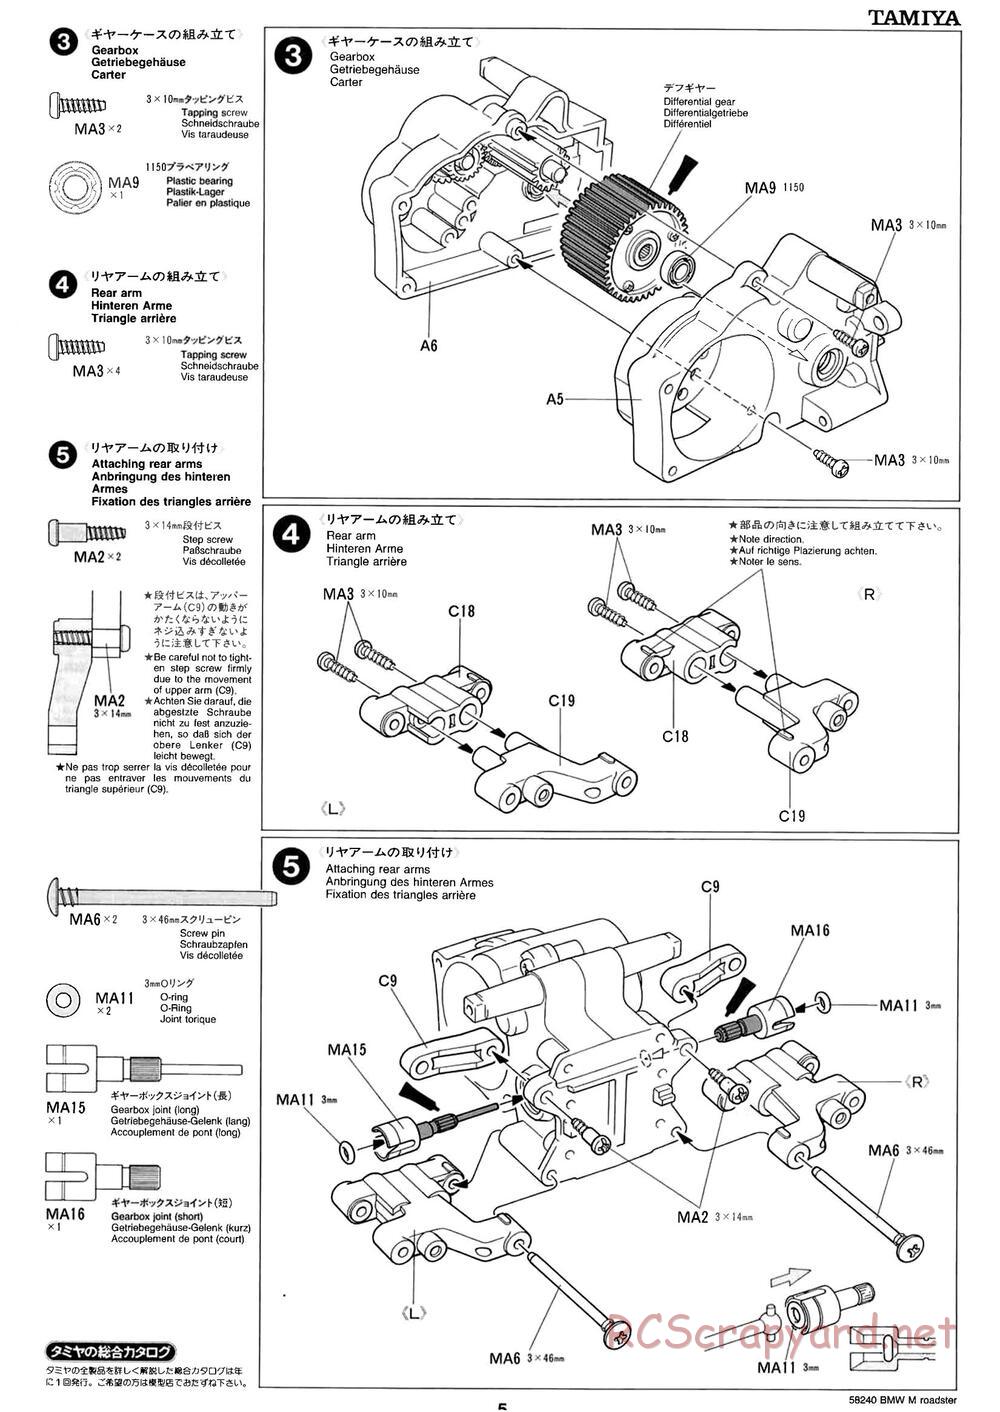 Tamiya - BMW M Roadster - M04L Chassis - Manual - Page 5